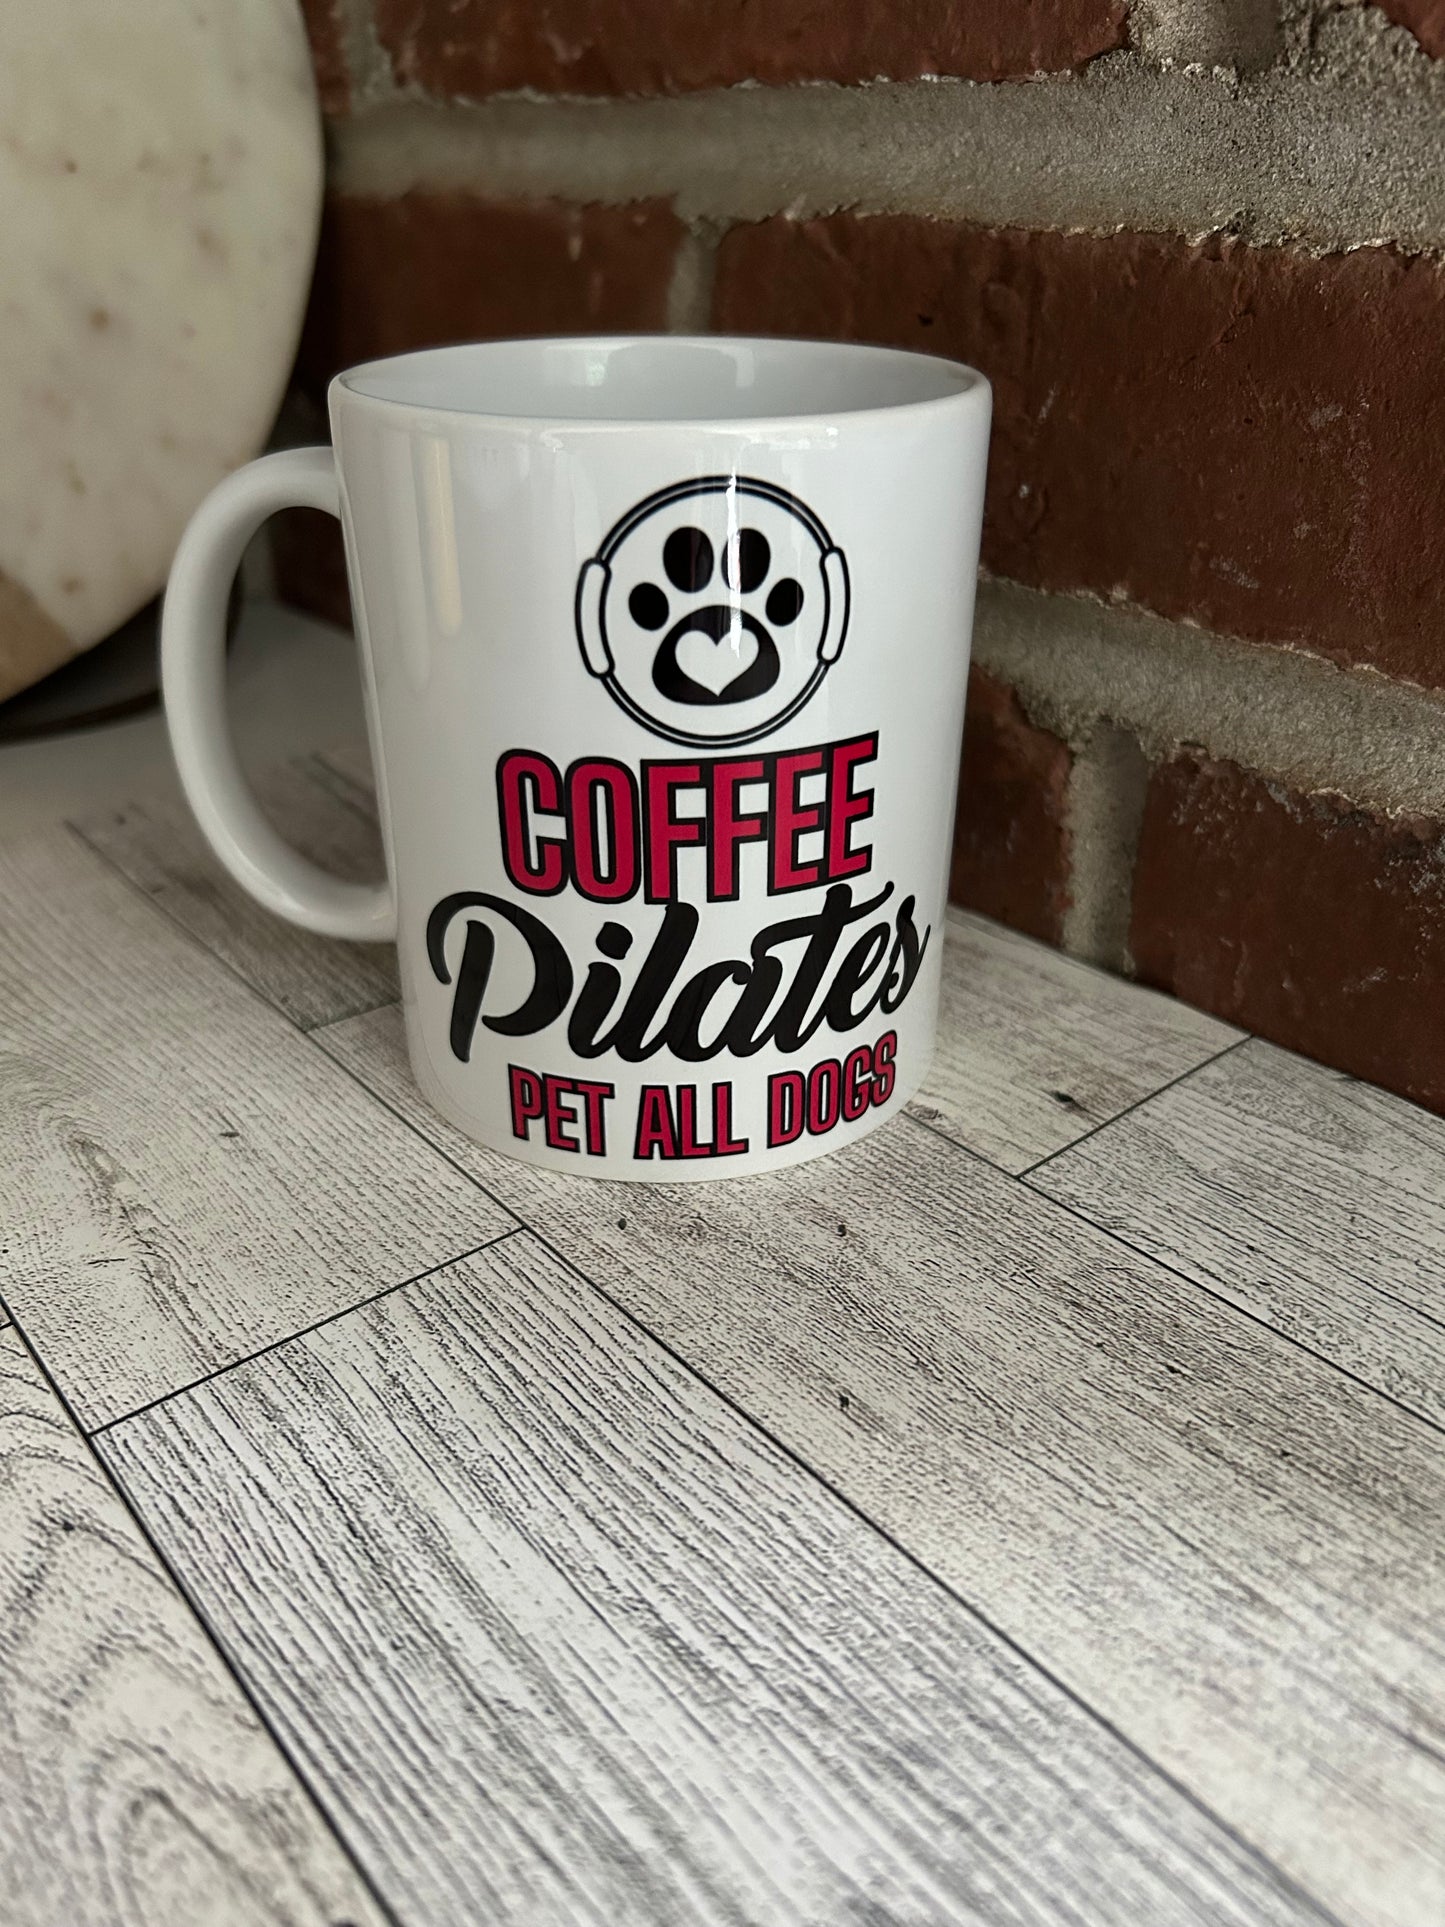 PDX Flower Power  "Coffee Pilates pet all dogs" mug, Fun mug for Pilates & Dog lovers.